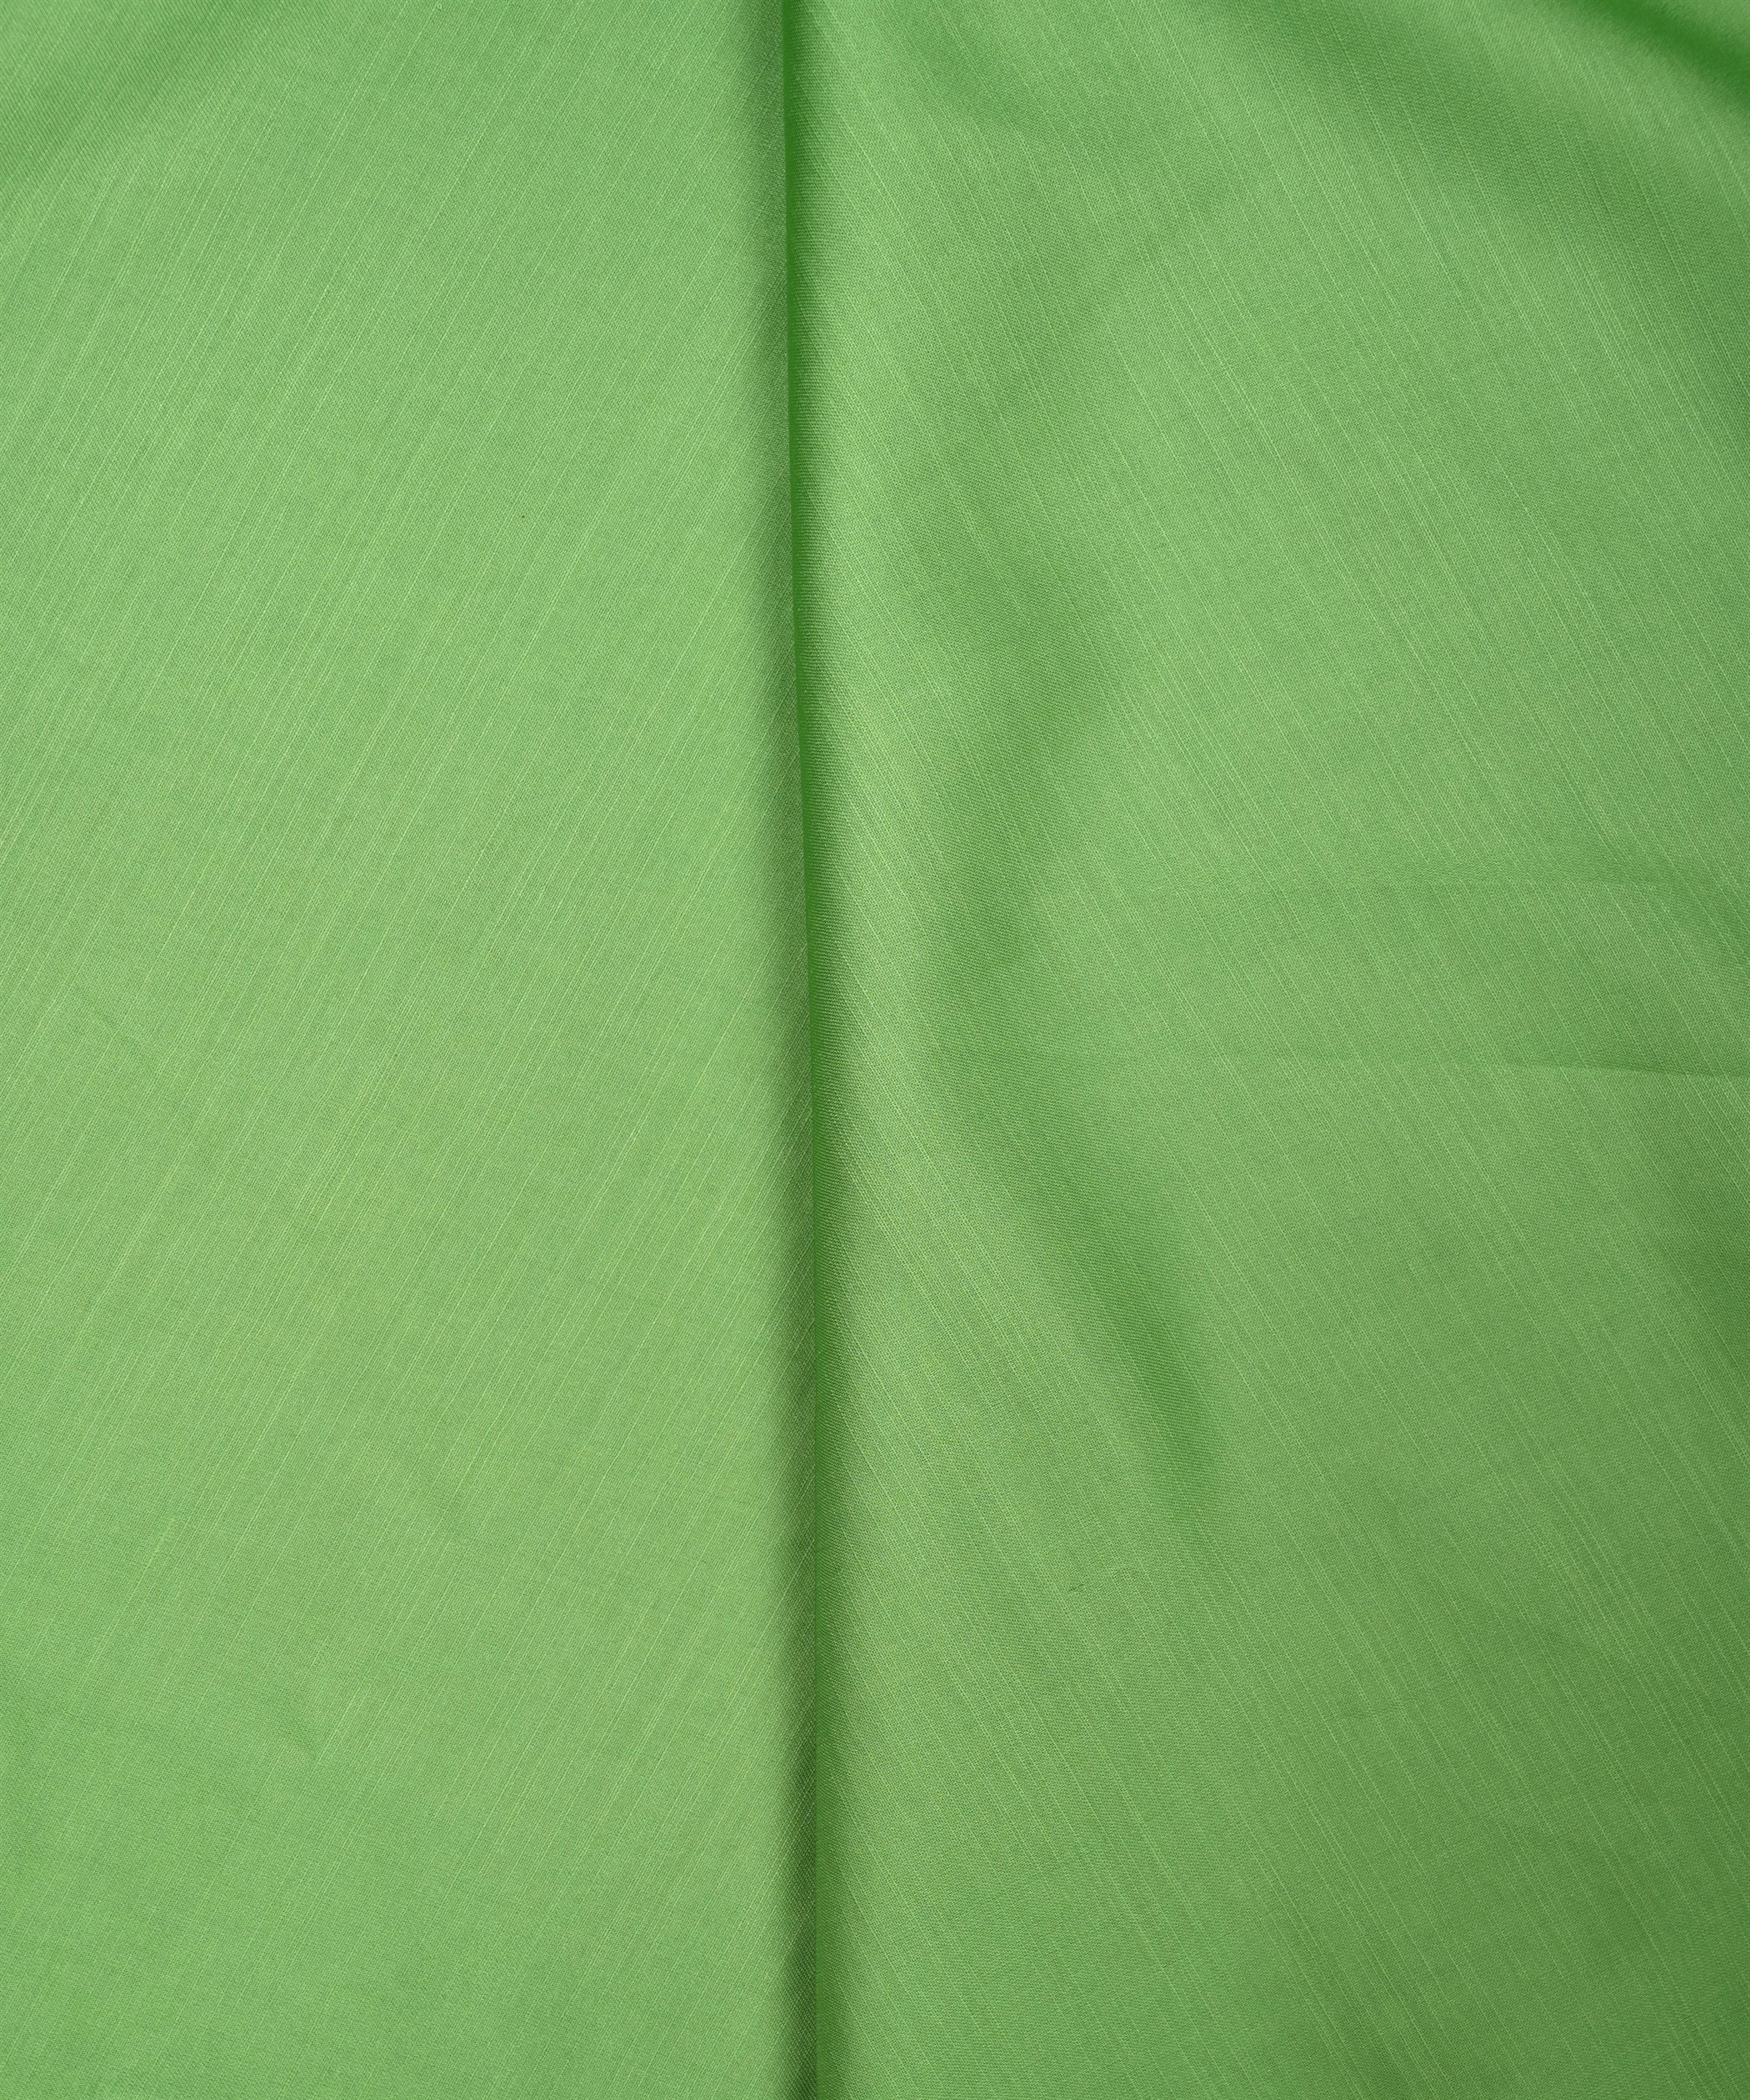 Parrot Green Plain Dyed Tussar Silk Fabric